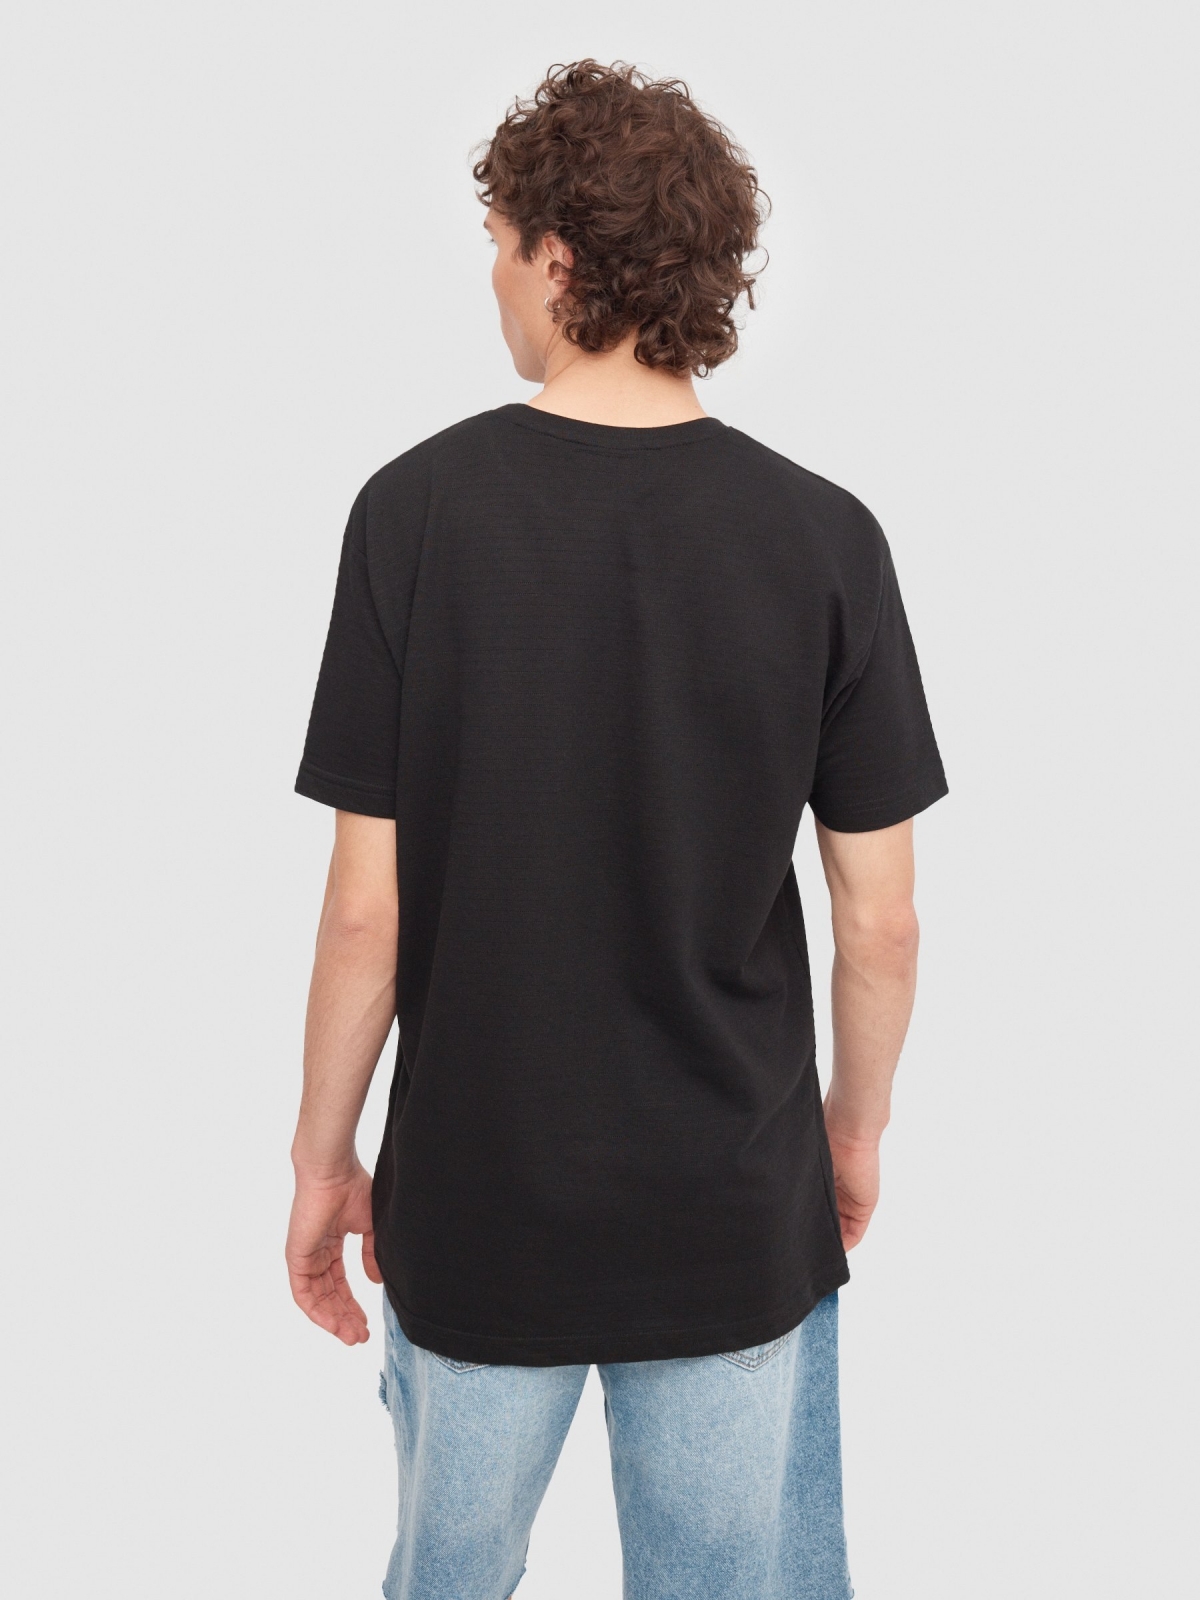 Camiseta rayas negro vista media trasera